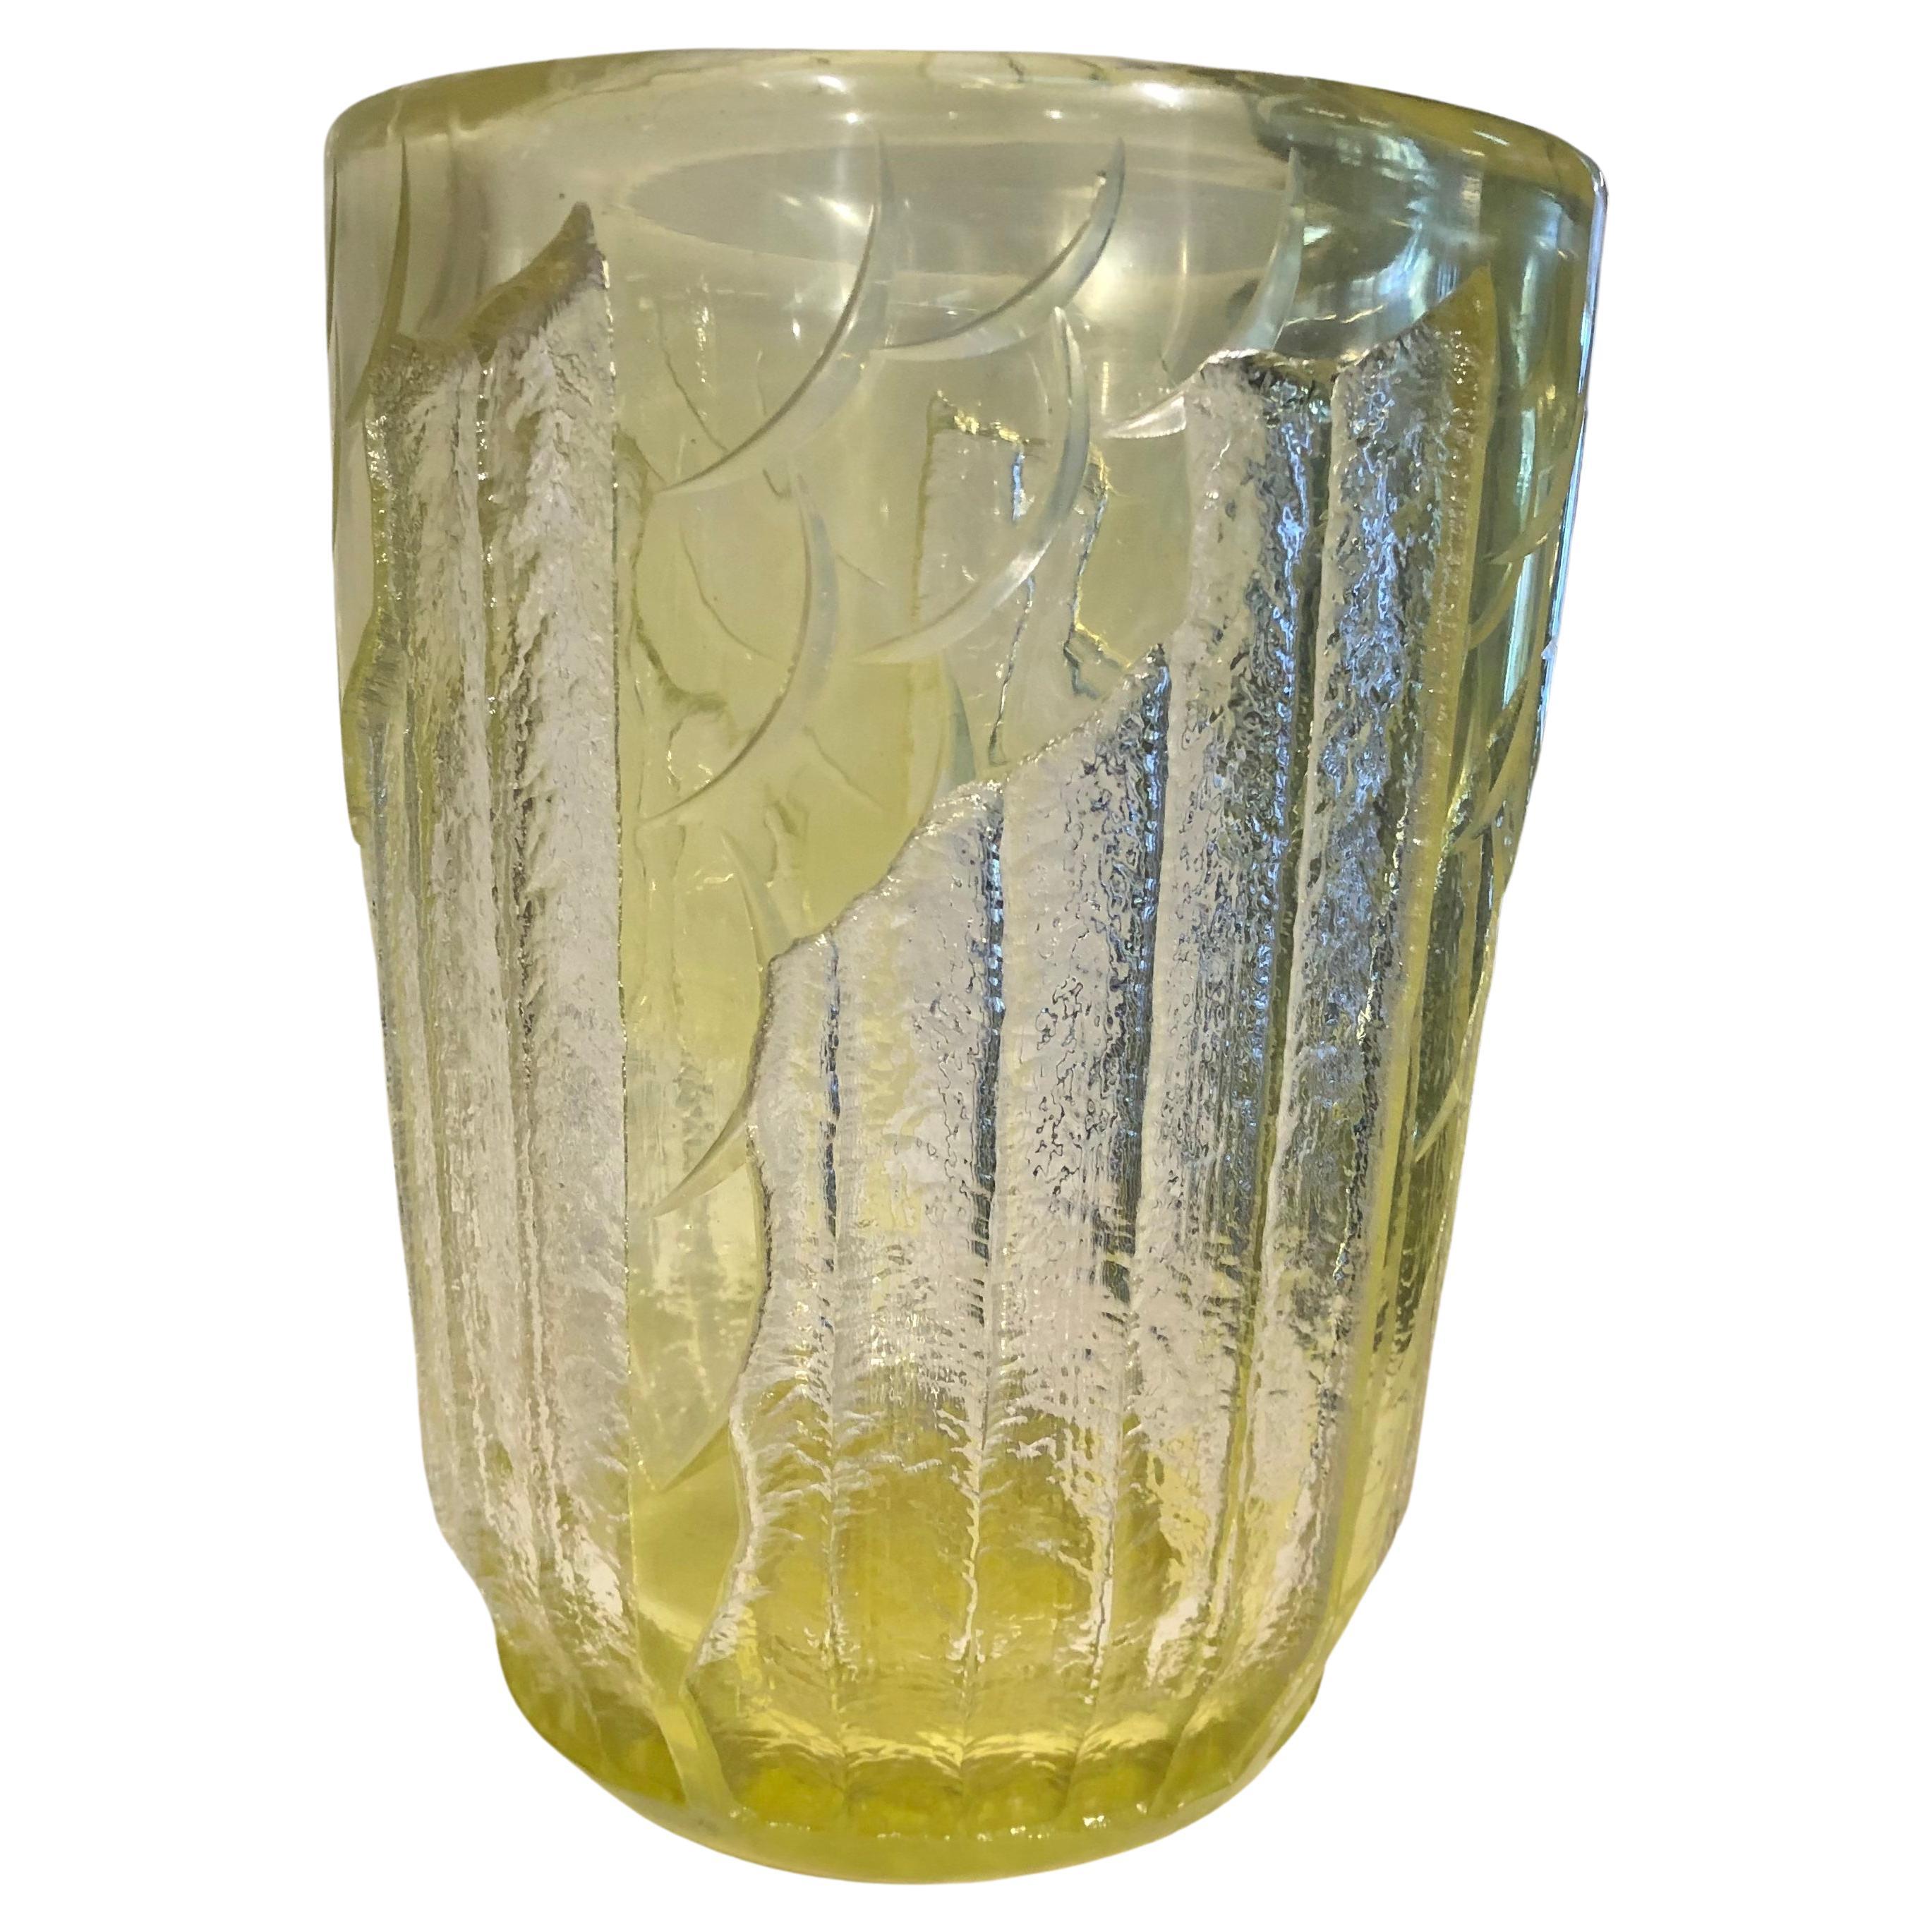 Art Deco Acid Etched Vase by Schneider